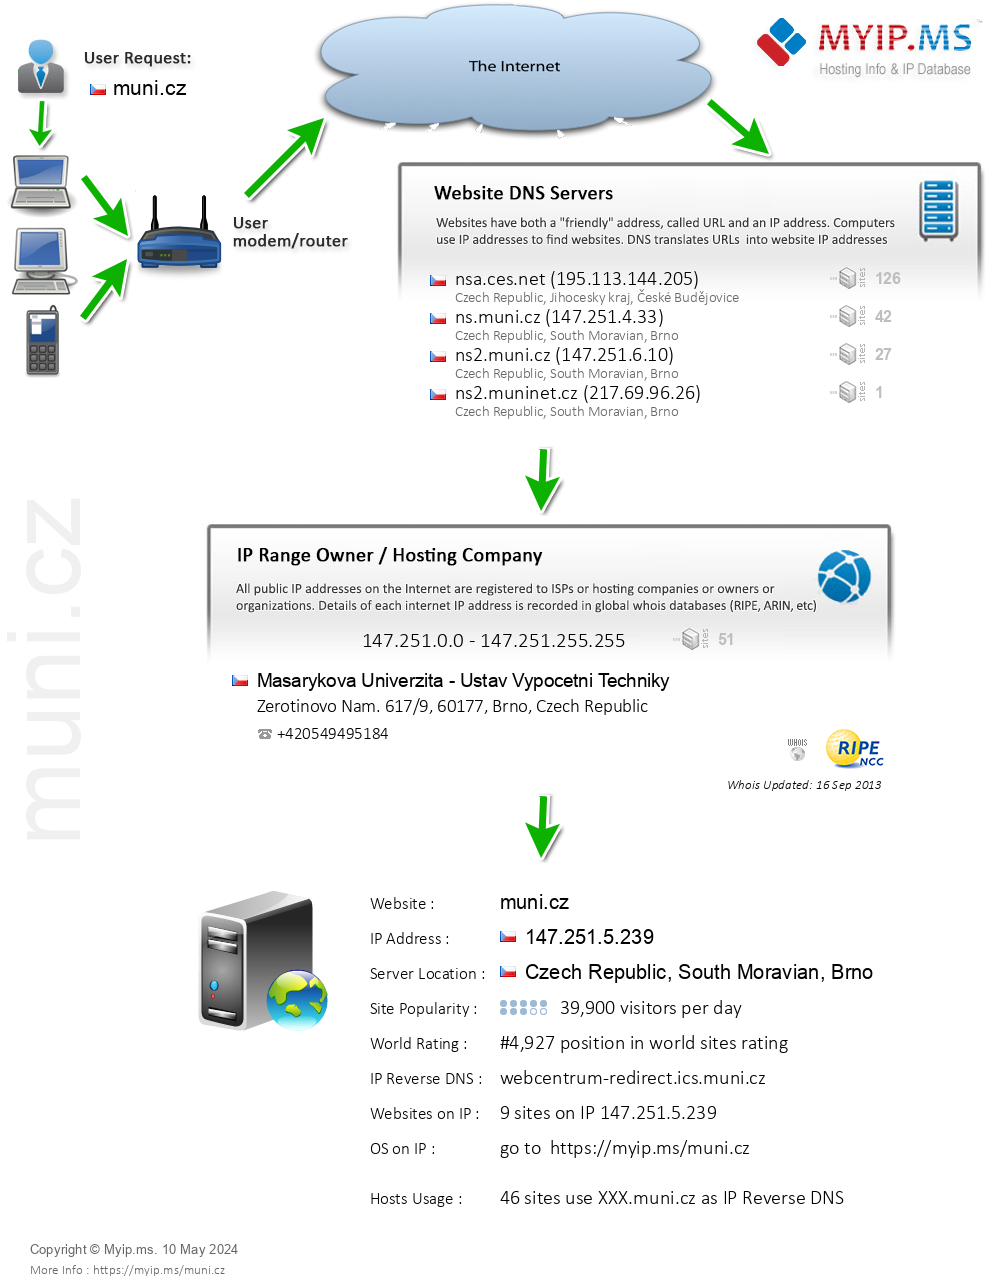 Muni.cz - Website Hosting Visual IP Diagram